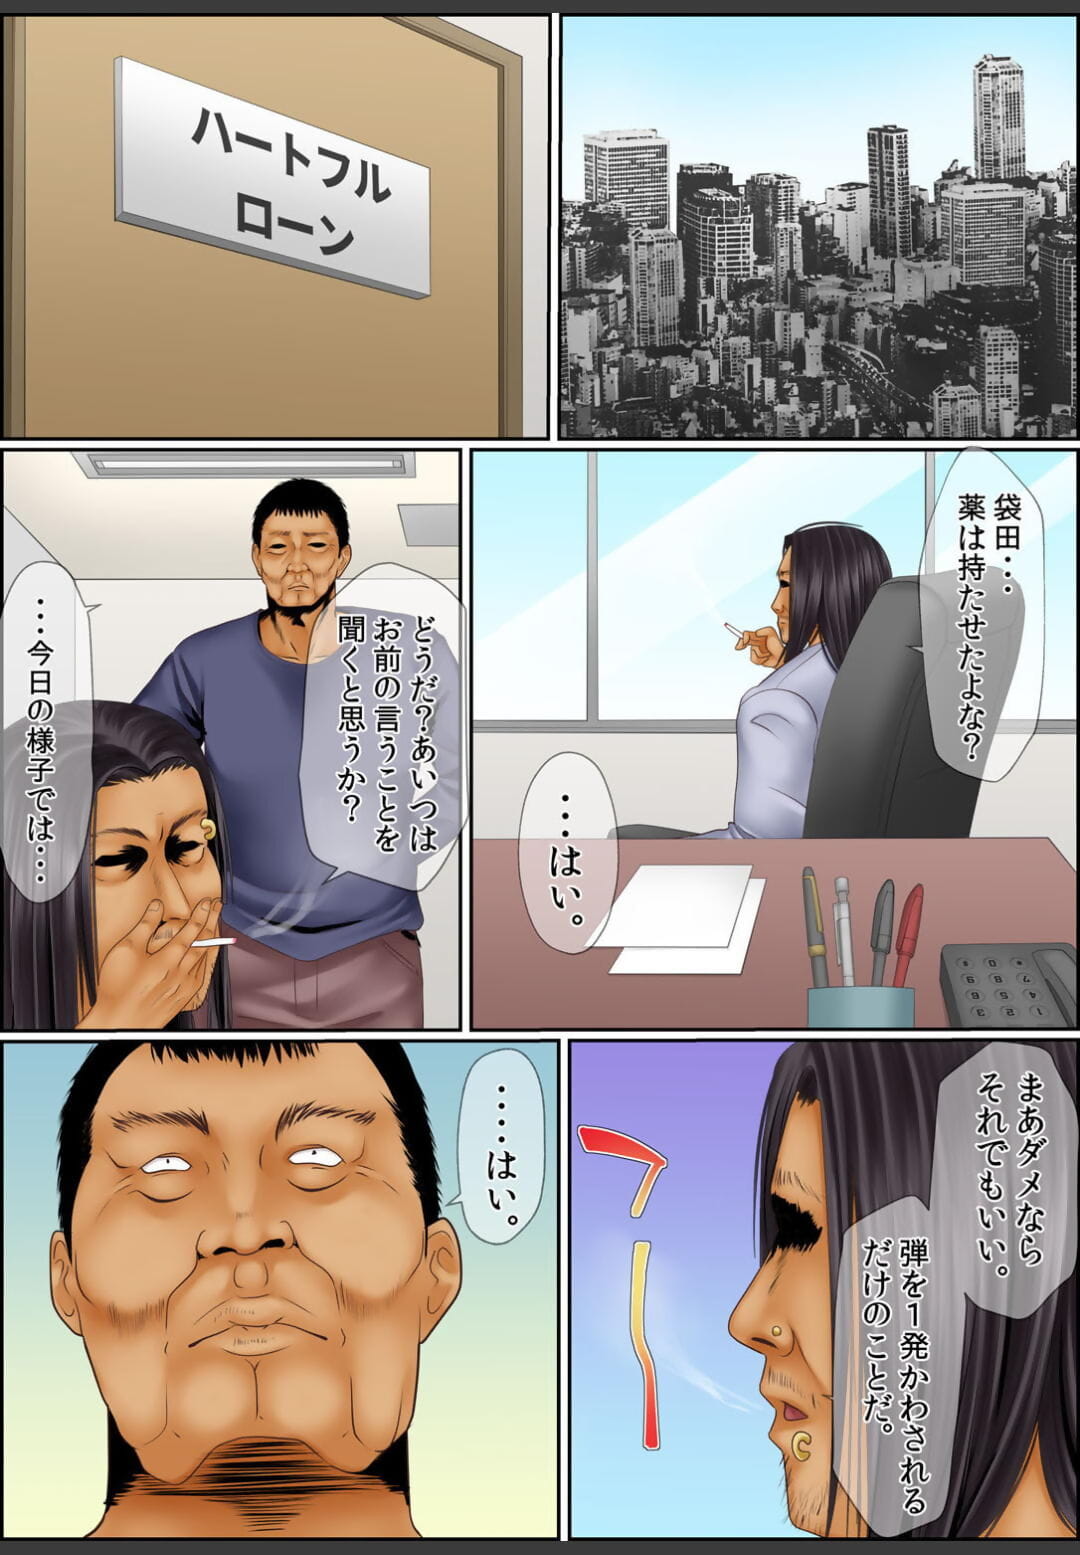 korosuke yamikinn onna ga Ochita Saki xem tất cả tags không Naka làm shaburare tsukusu zouryoubann2 phần 3